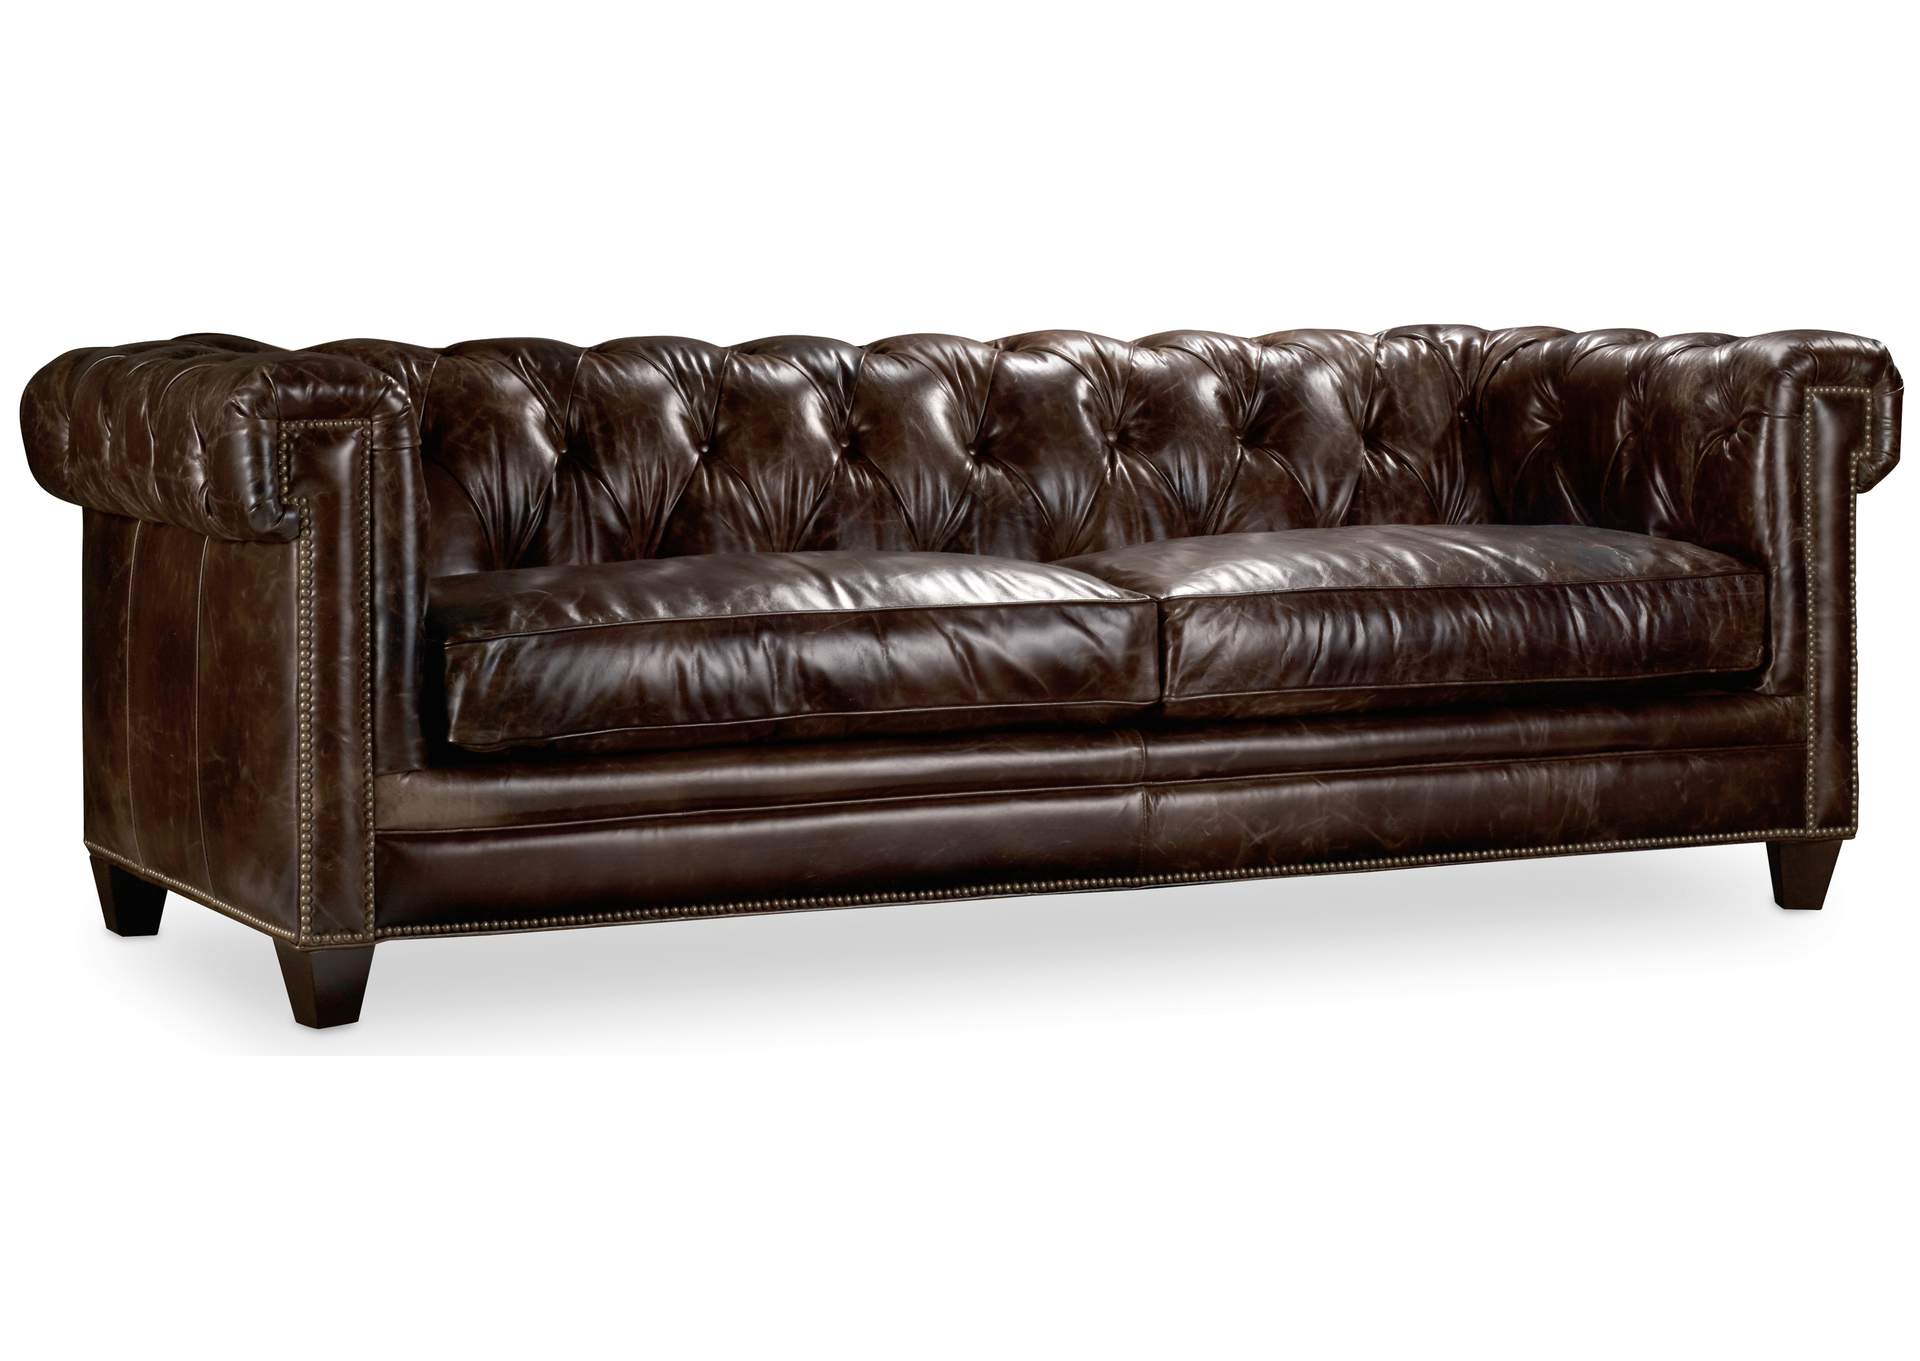 Chester Stationary Sofa,Hooker Furniture